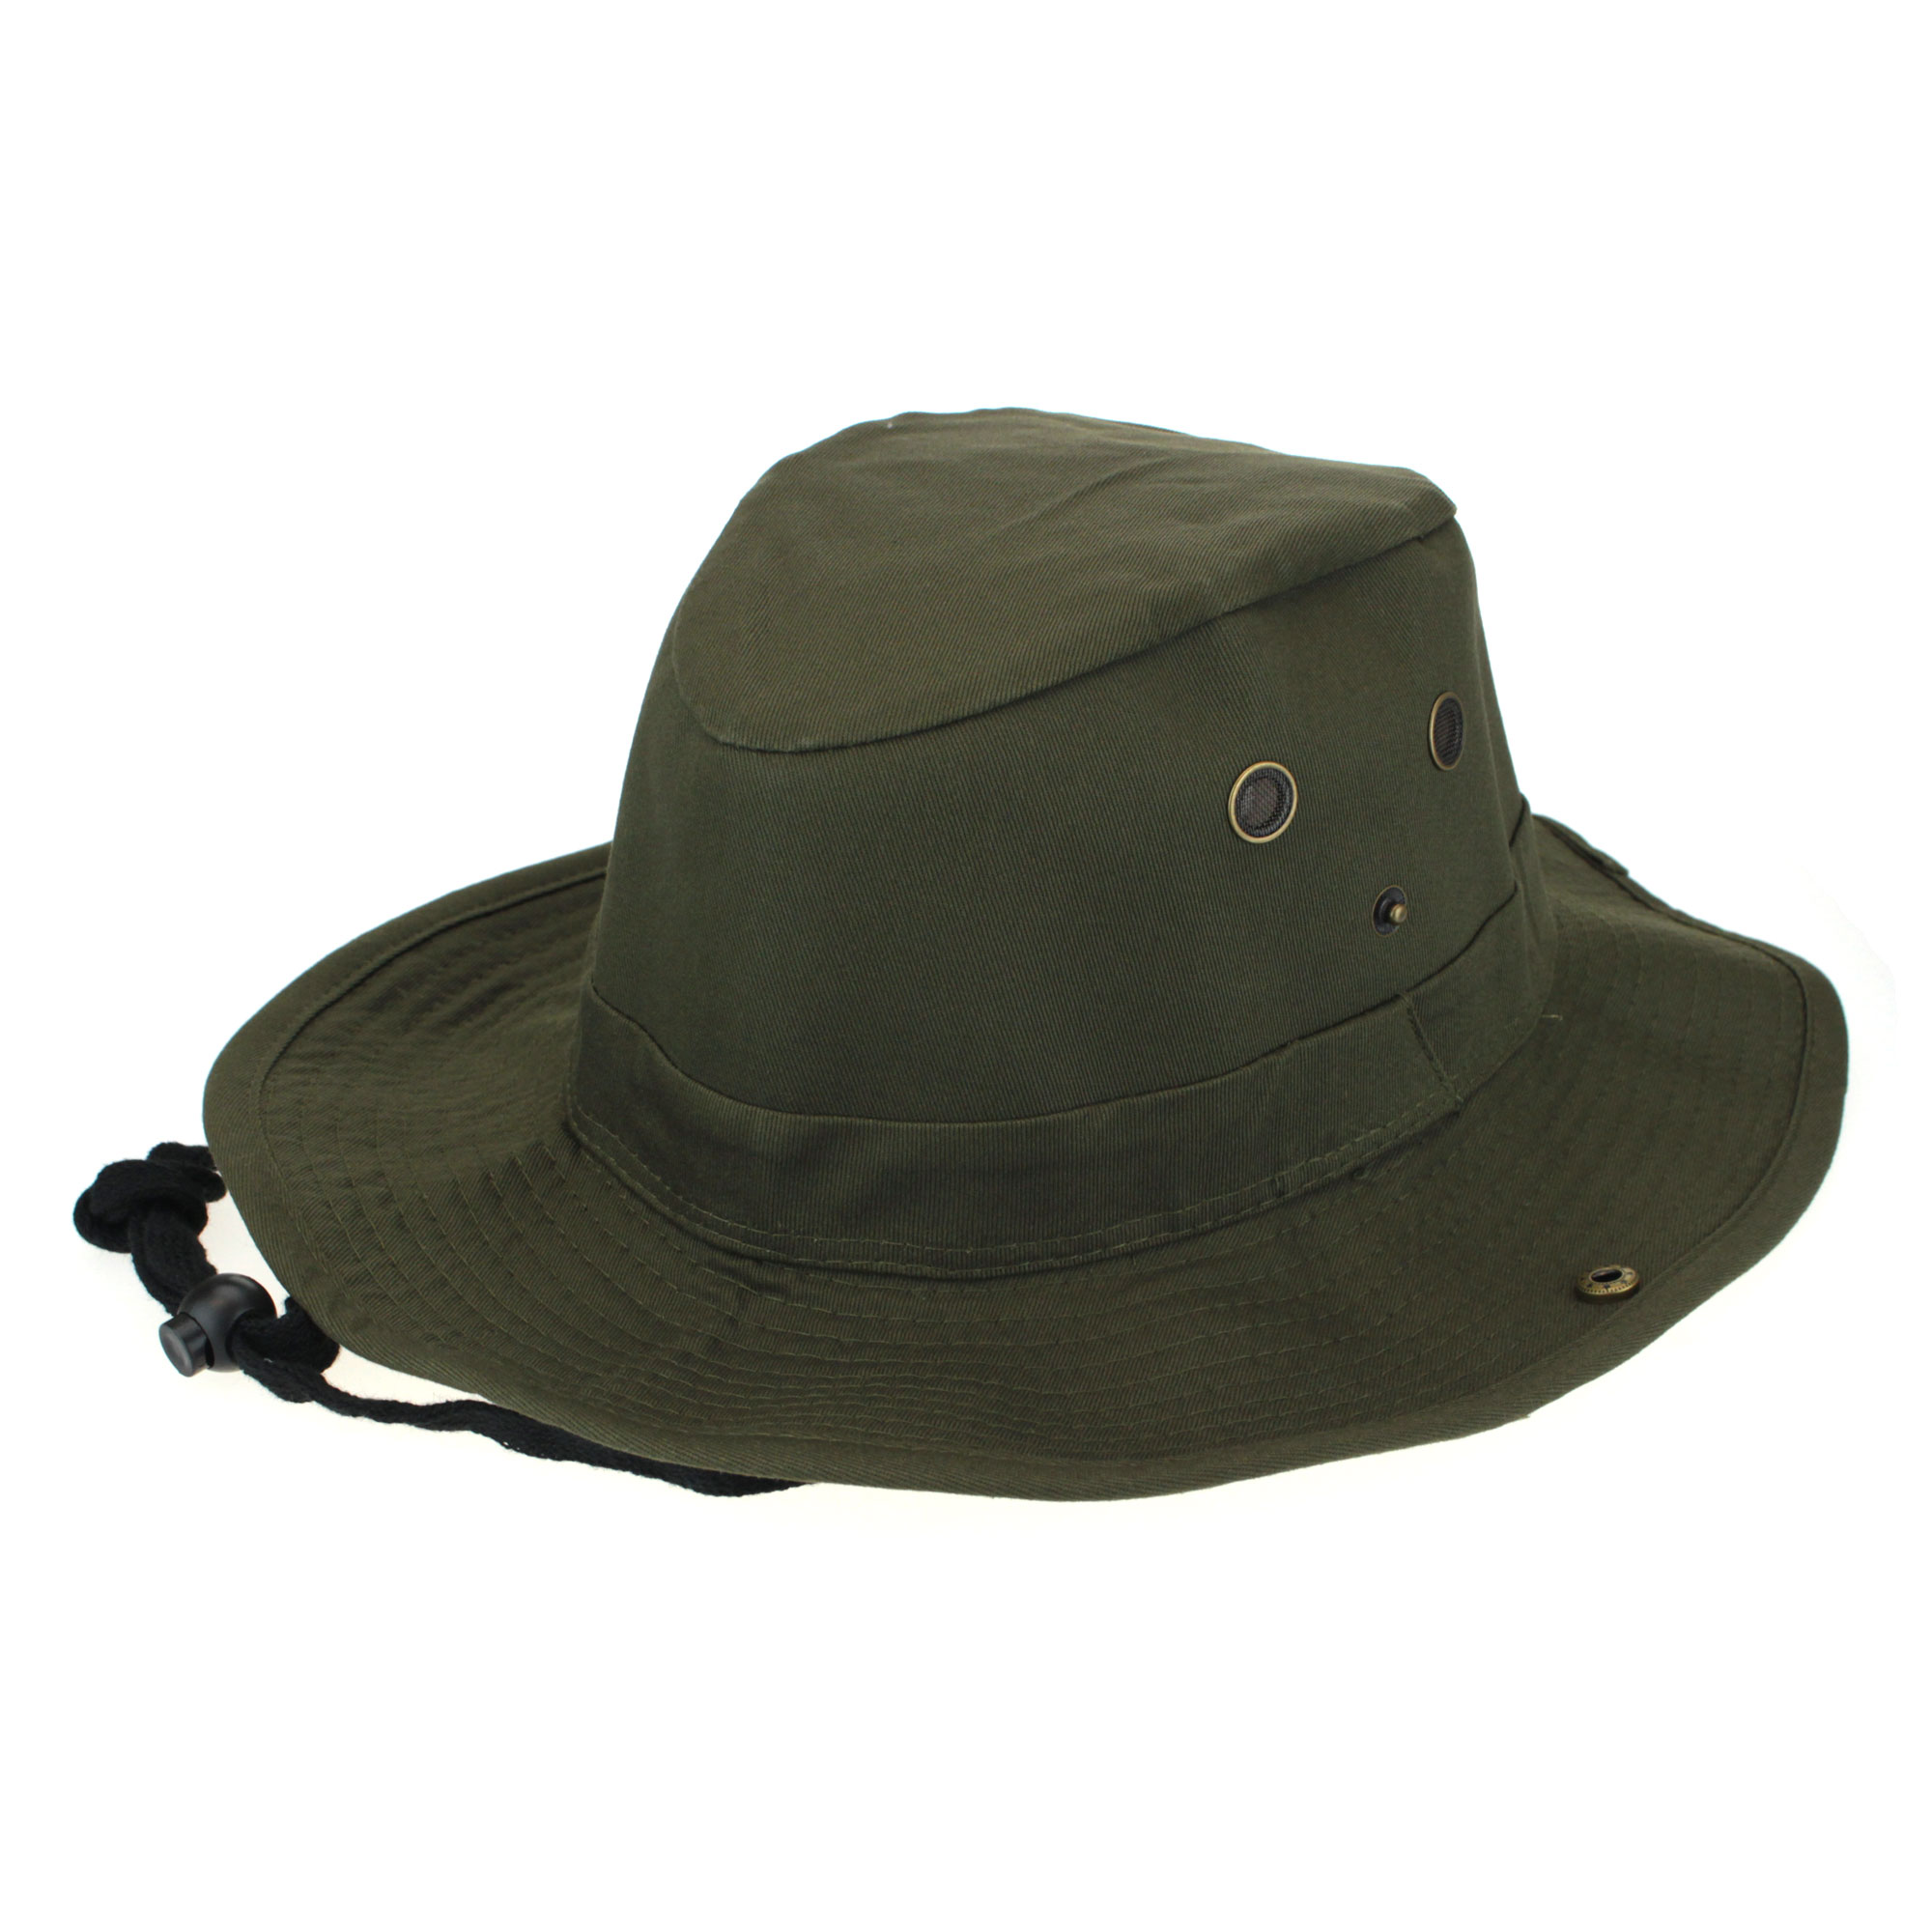 Classic Mens Cotton Twill Safari Bucket Sun Hat Army Green Medium (7-1/4) - image 1 of 1